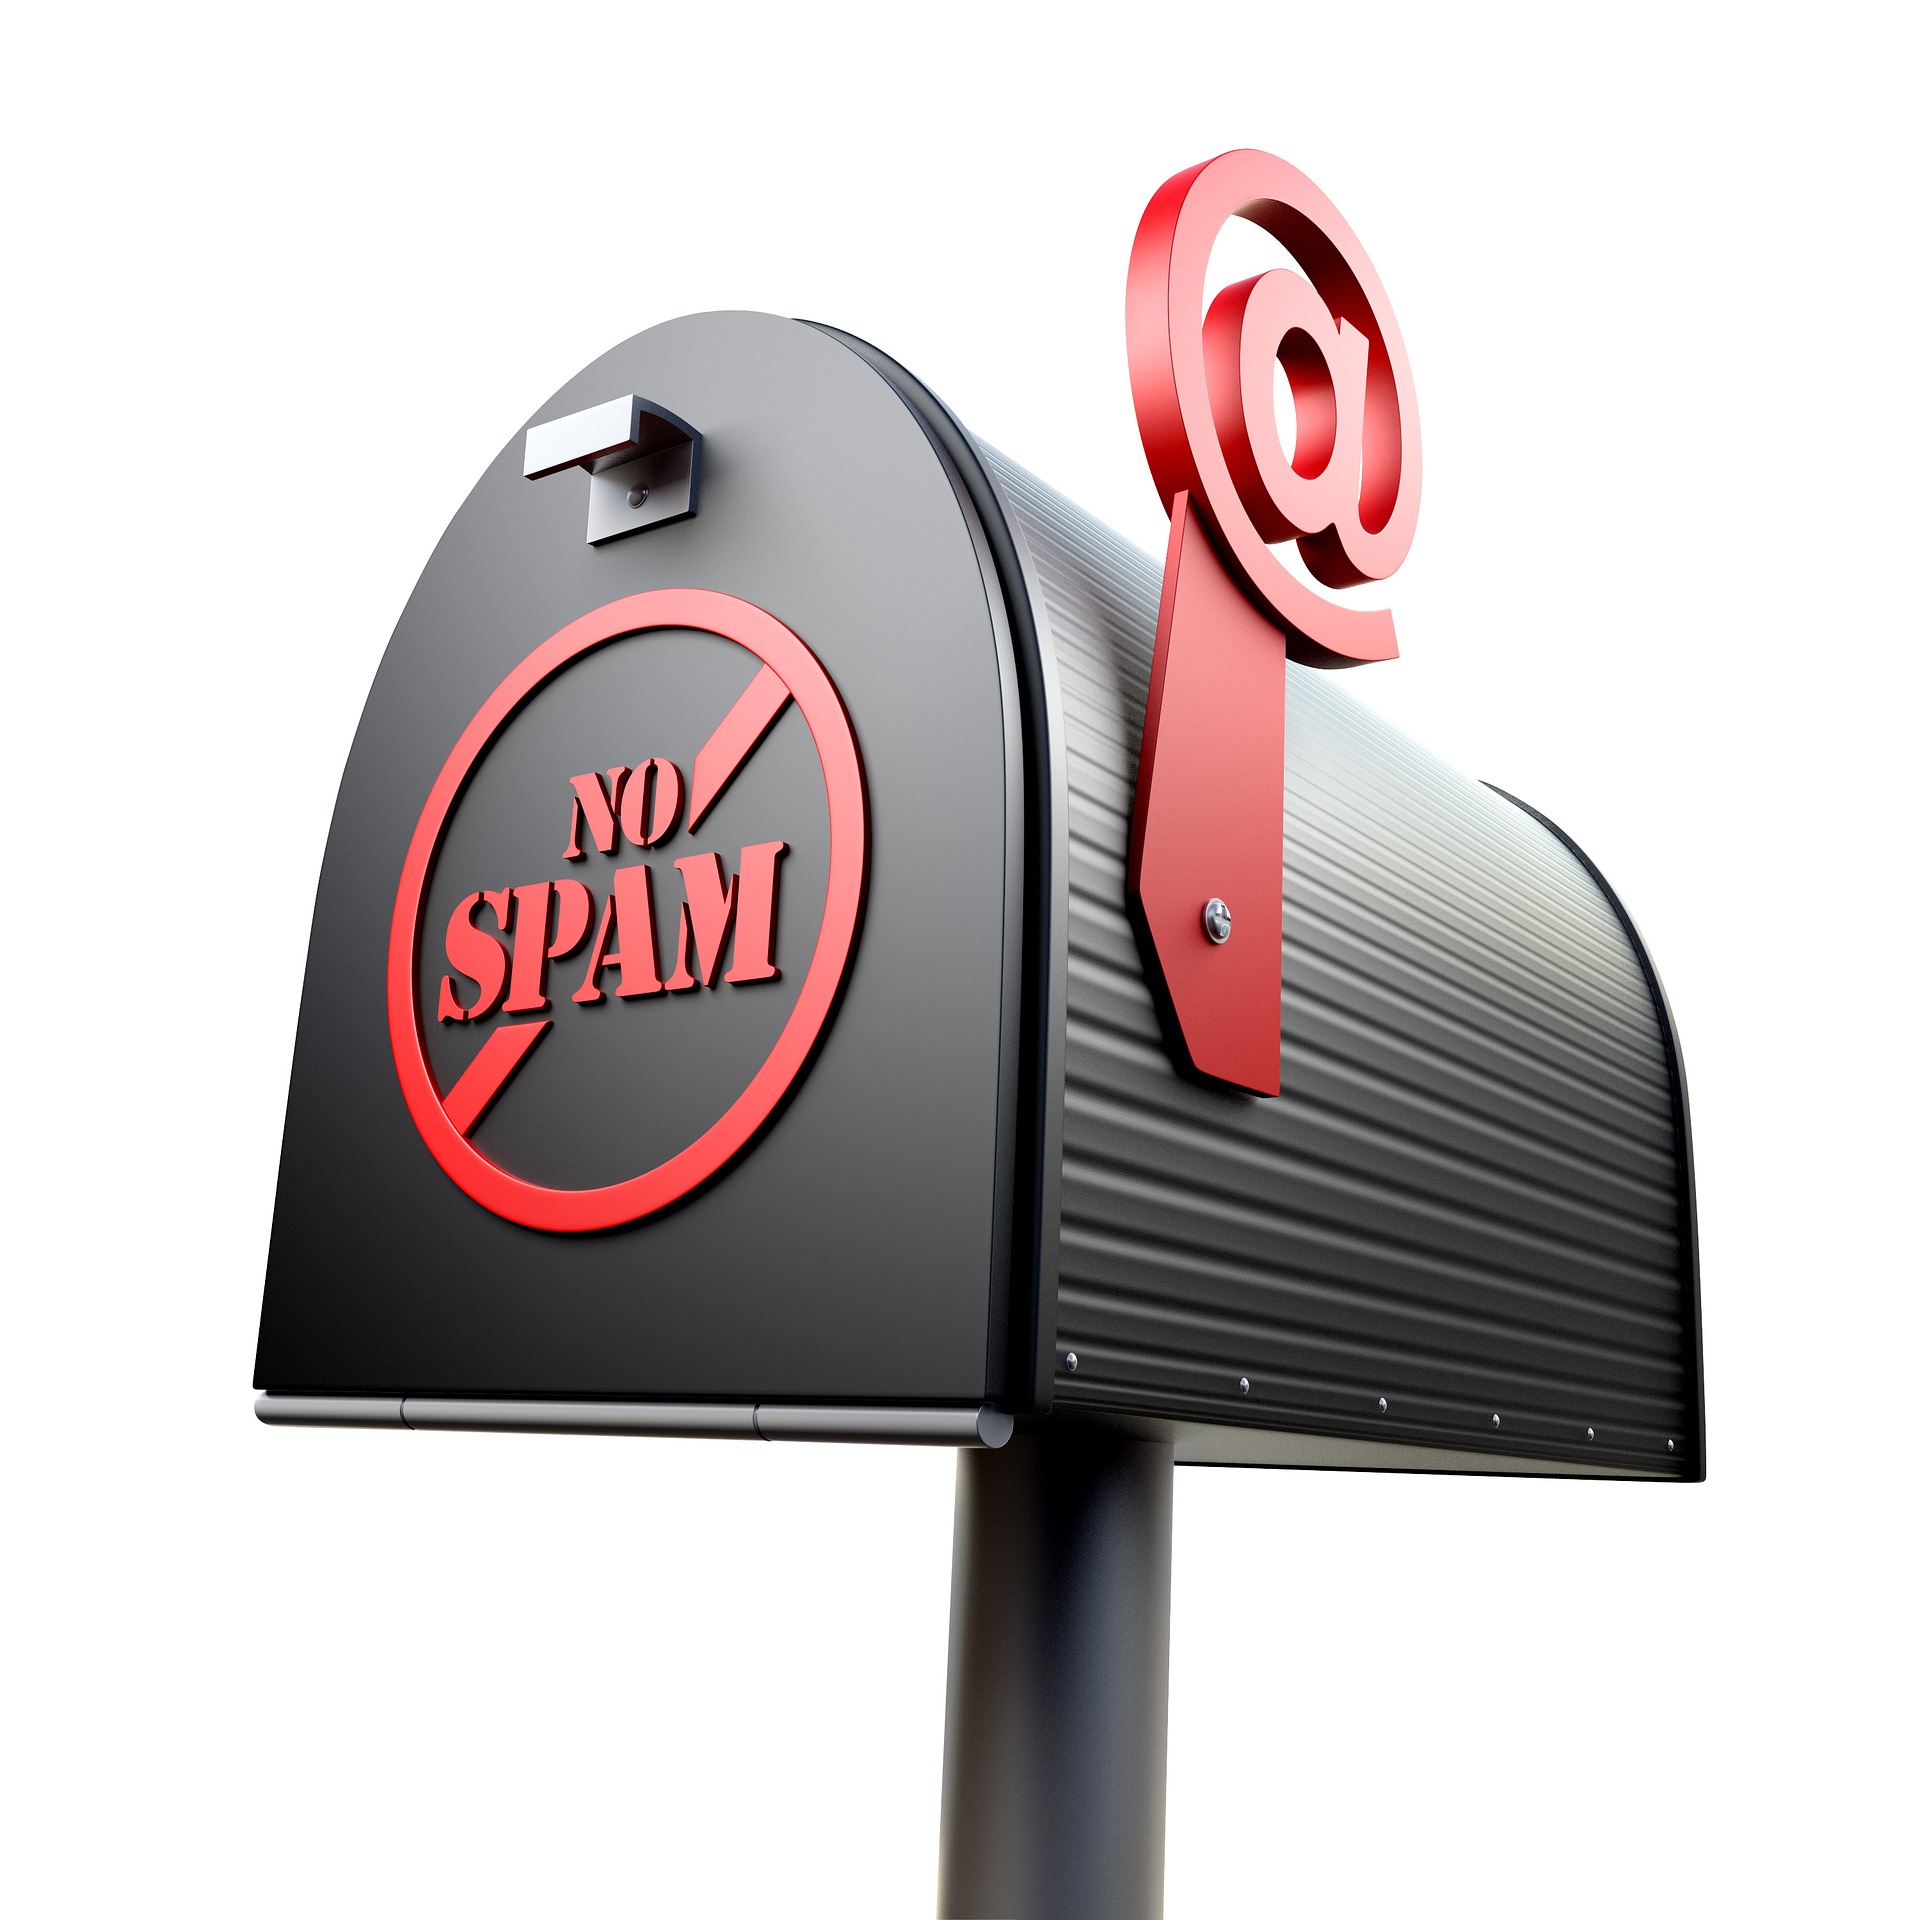 spam-mail-box-gf78c159b4_1920